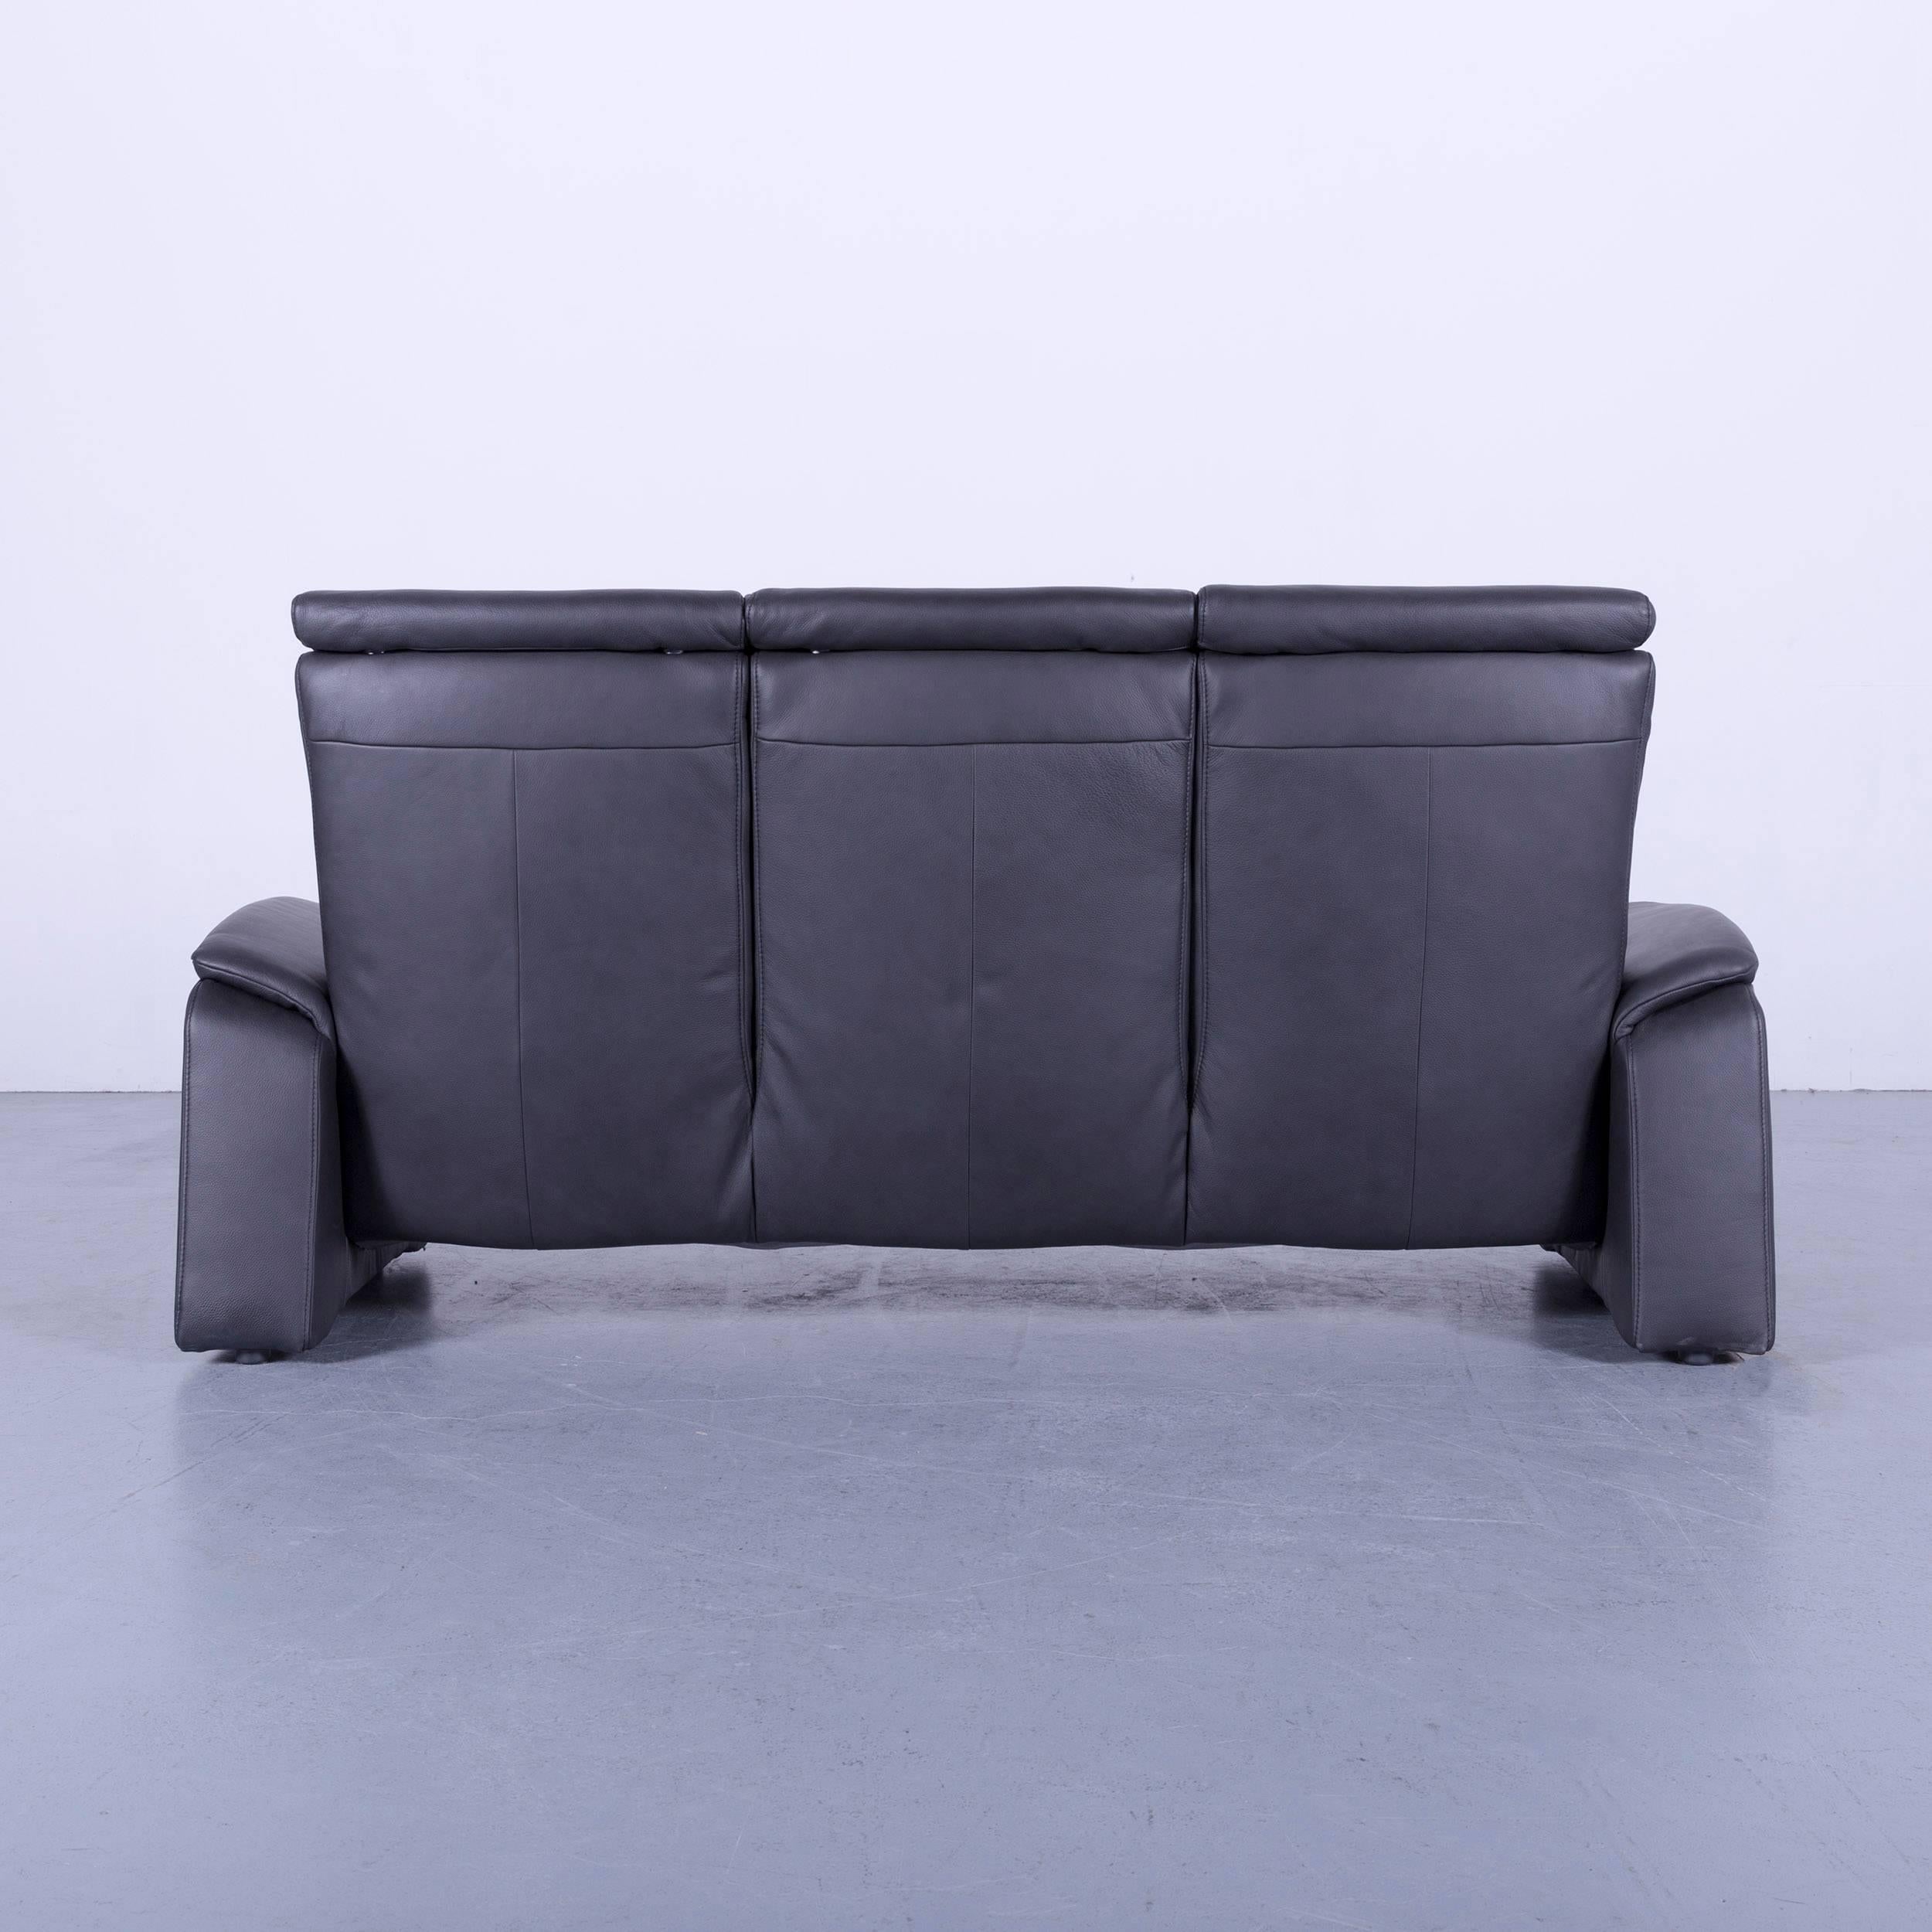 Himolla Leather Sofa Black Three-Seat Couch 3